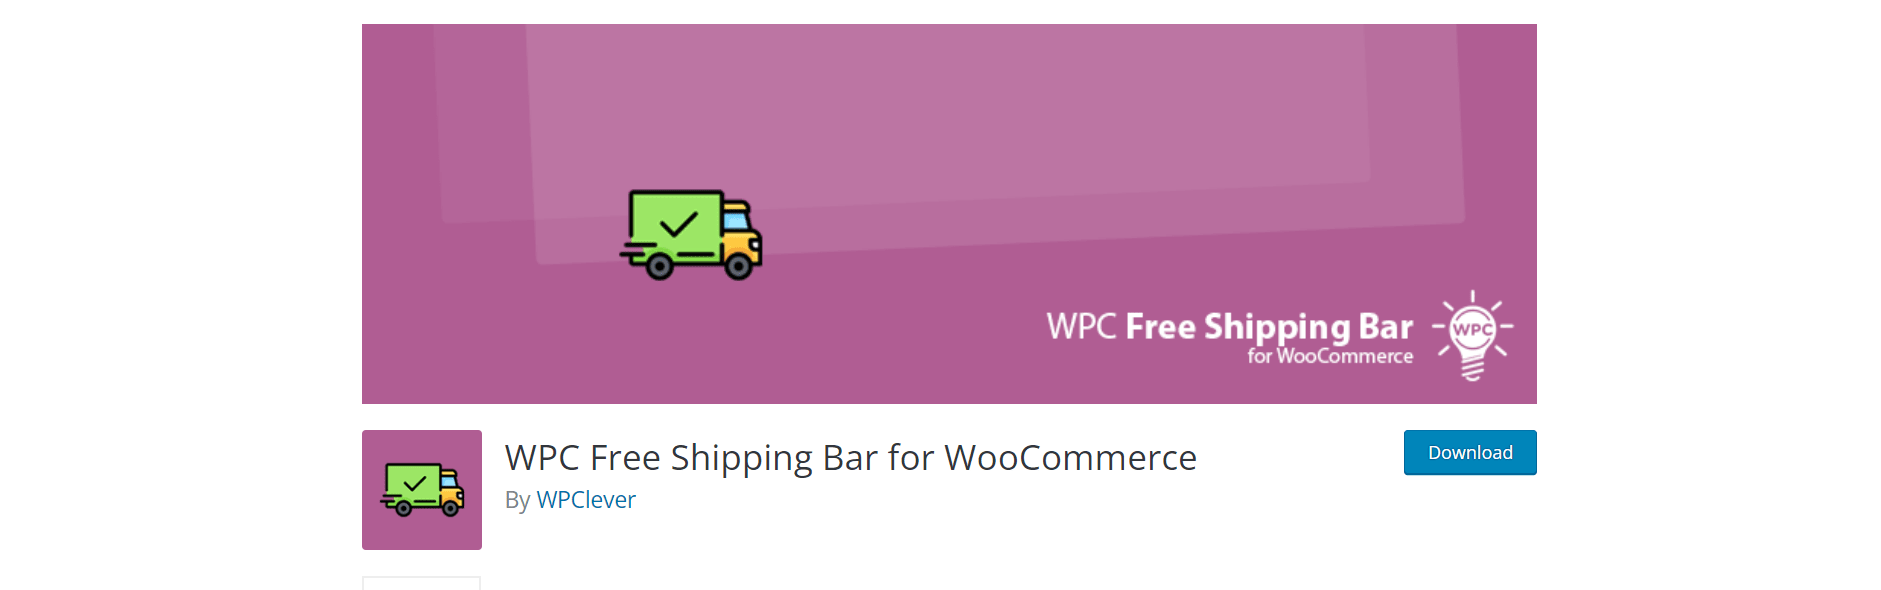 Free shipping bar for WordPress